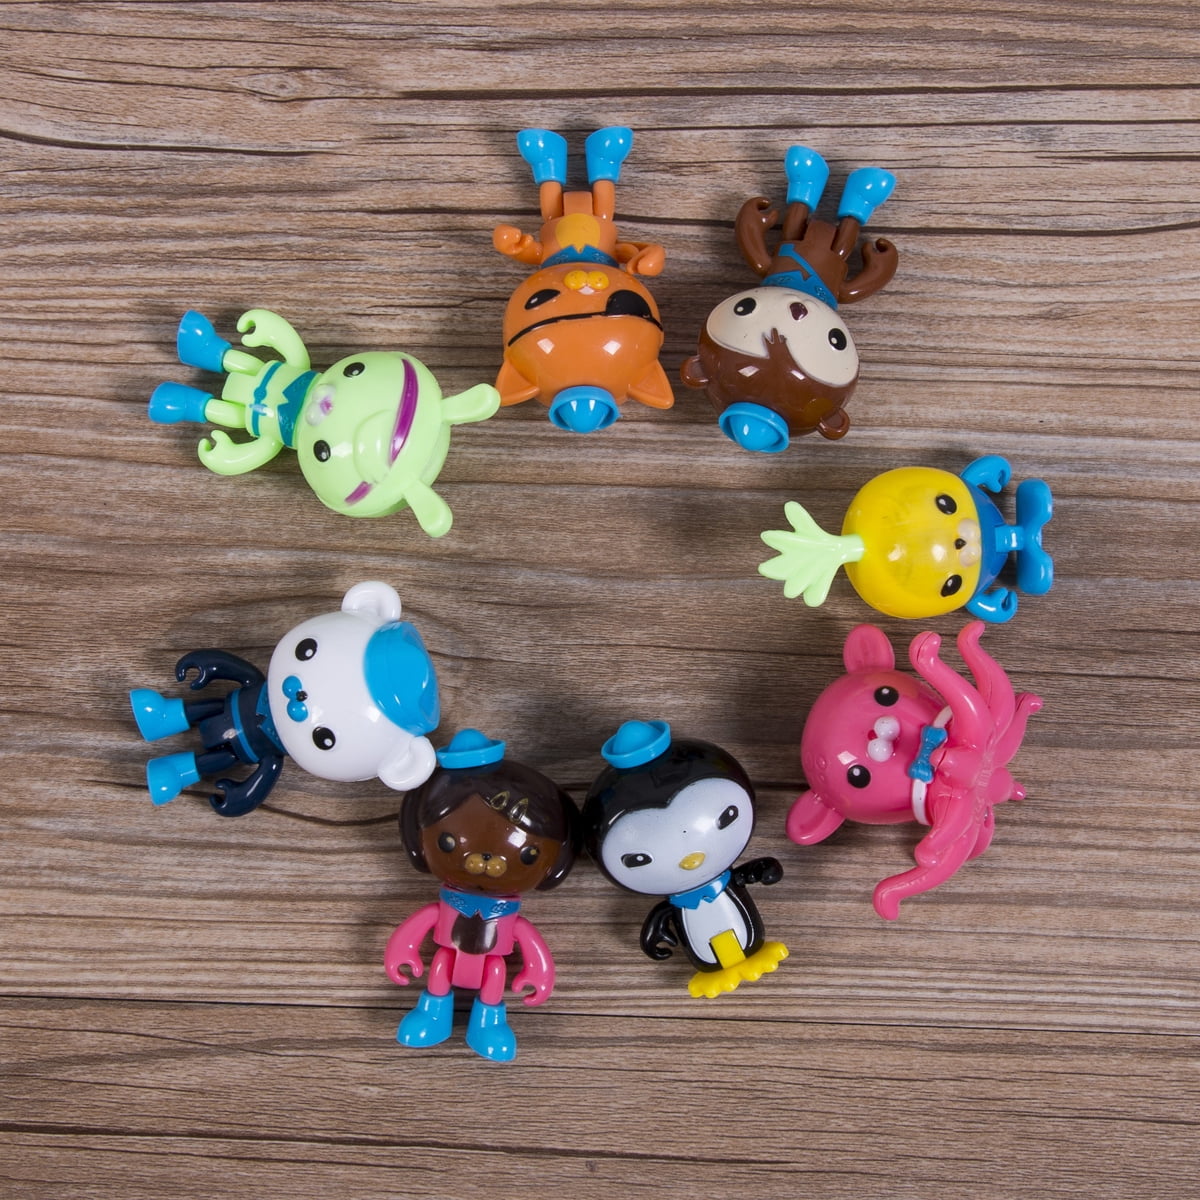 8pcs Set The Octonauts Figures Octo Crew Pack Playset PVC Action Figure Doll Toy